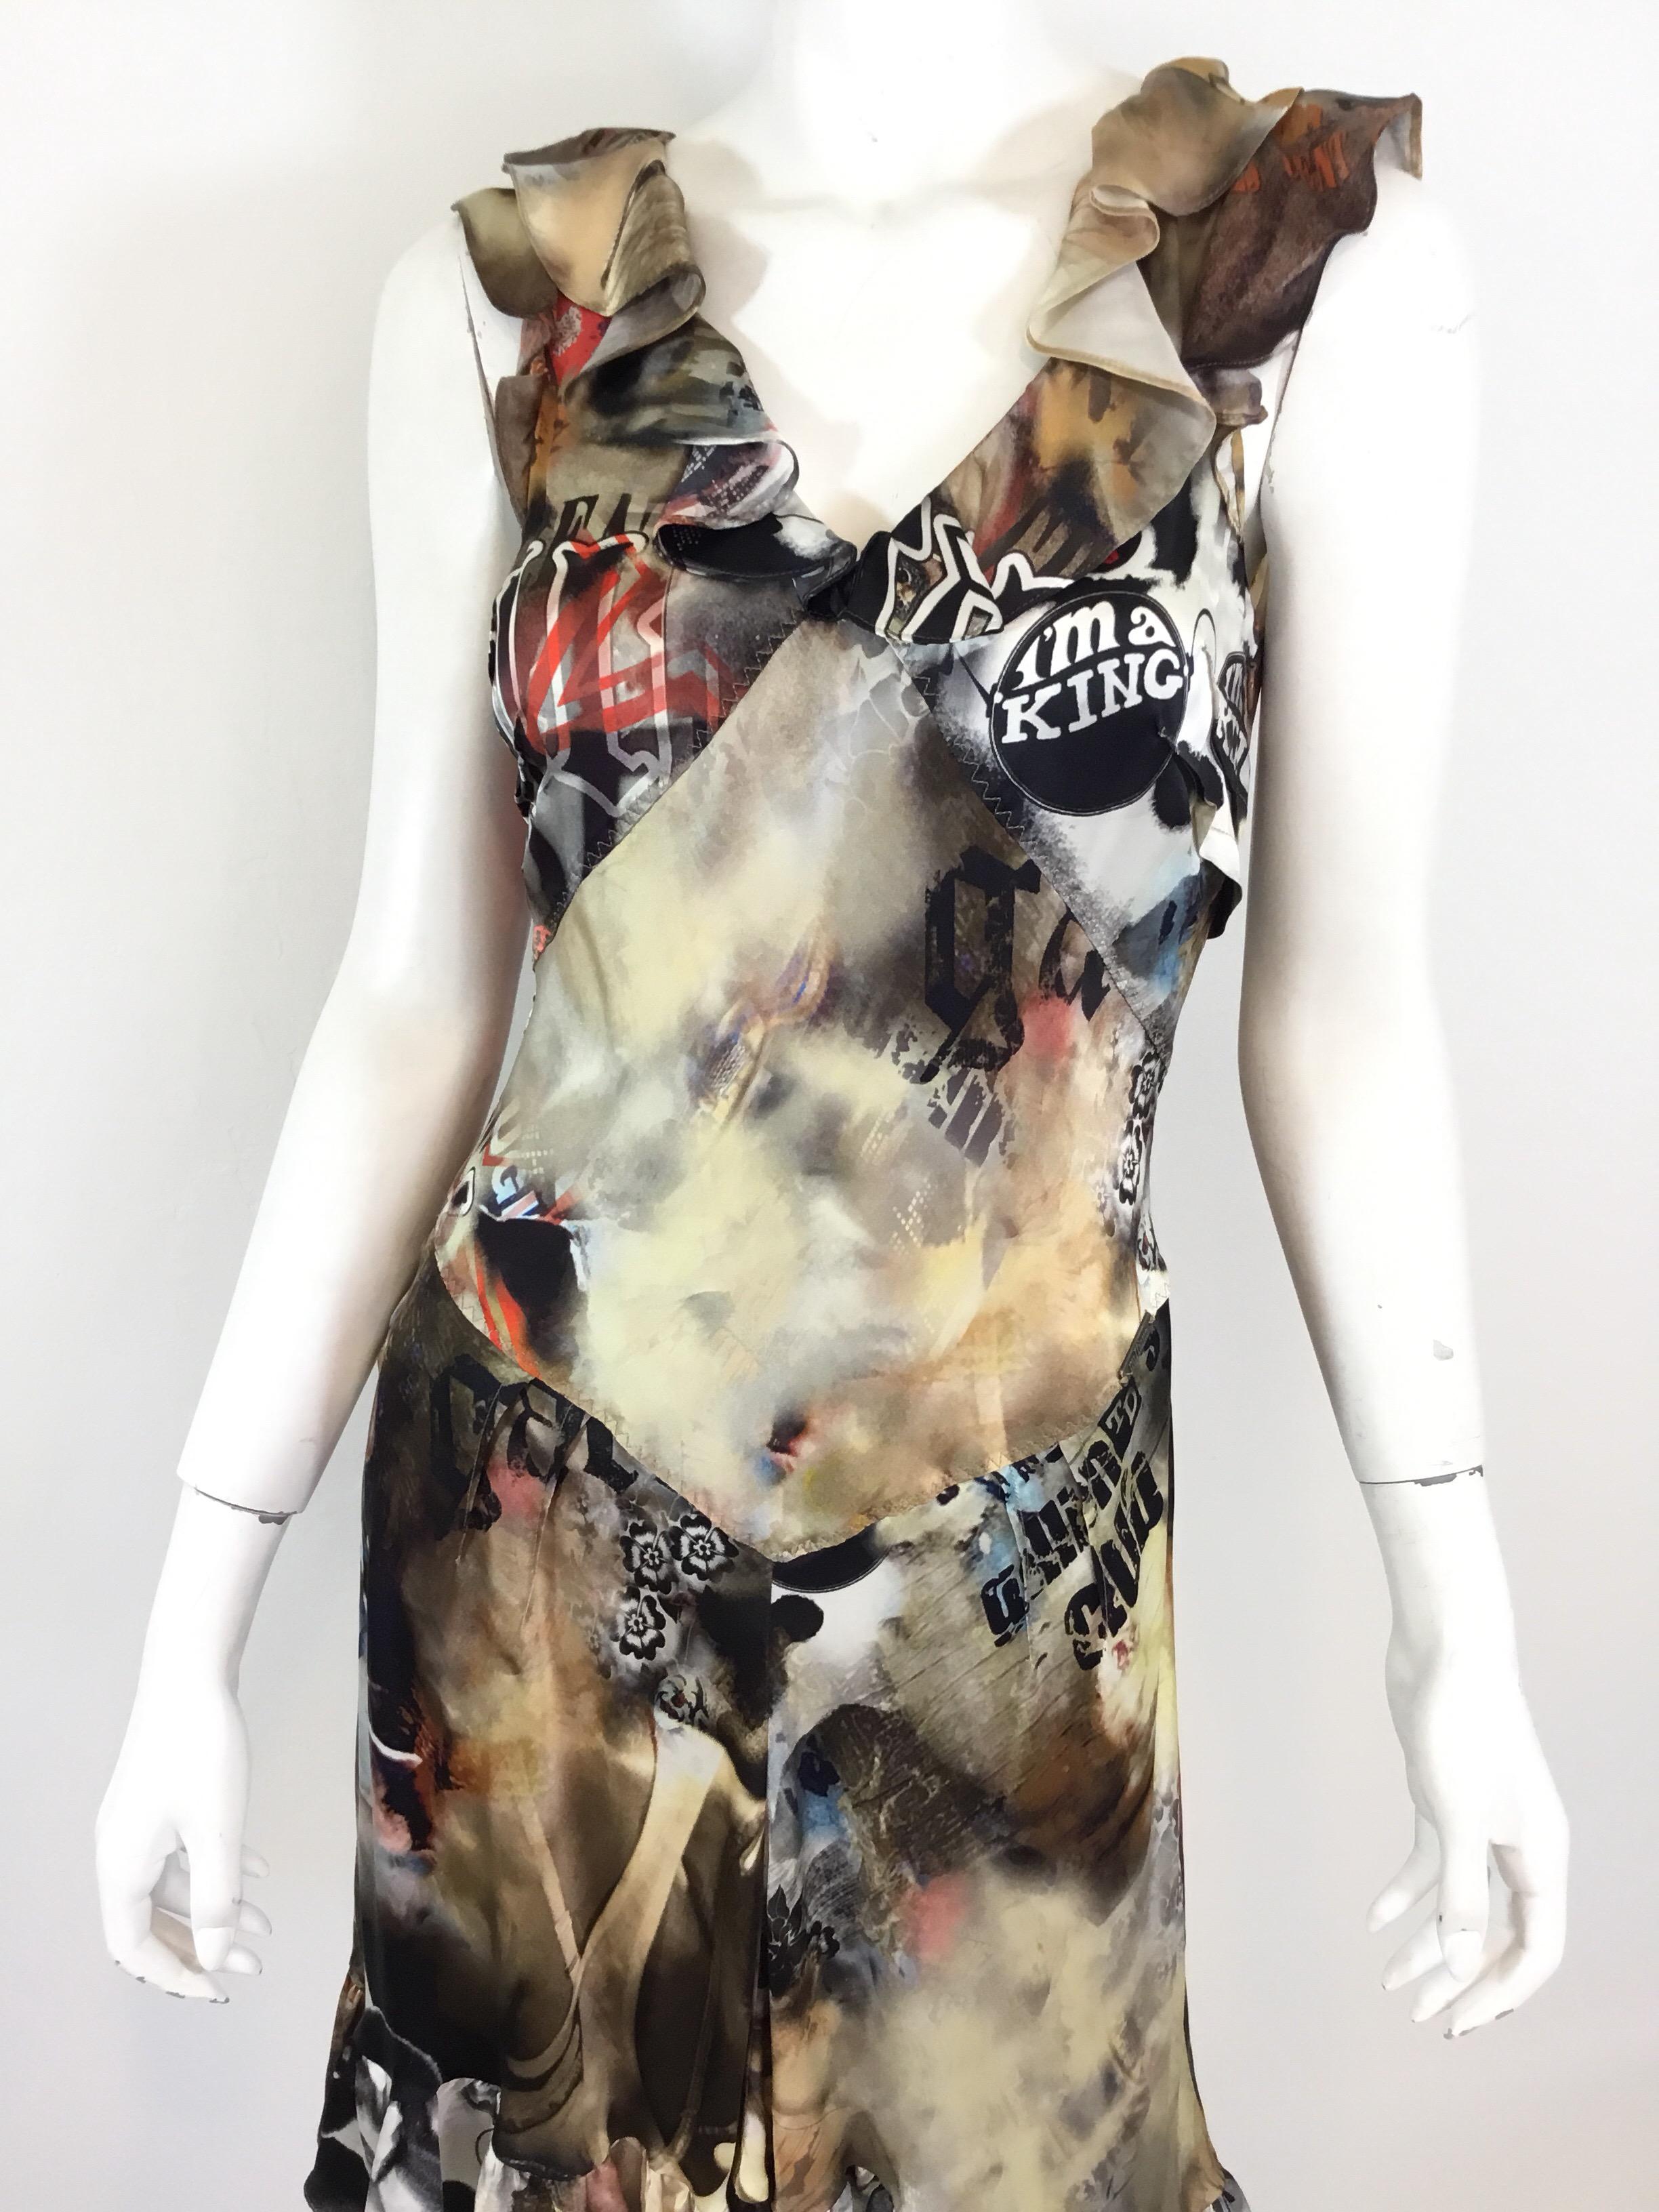 John Galliano silk dress features a multicolored Print throughout, v-neckline with a side zipper closure, ruffled hem and sleeve trim. Dress is a size 40, 100% silk.

Bust 32”, waist 28”, hips 34”, length 37”